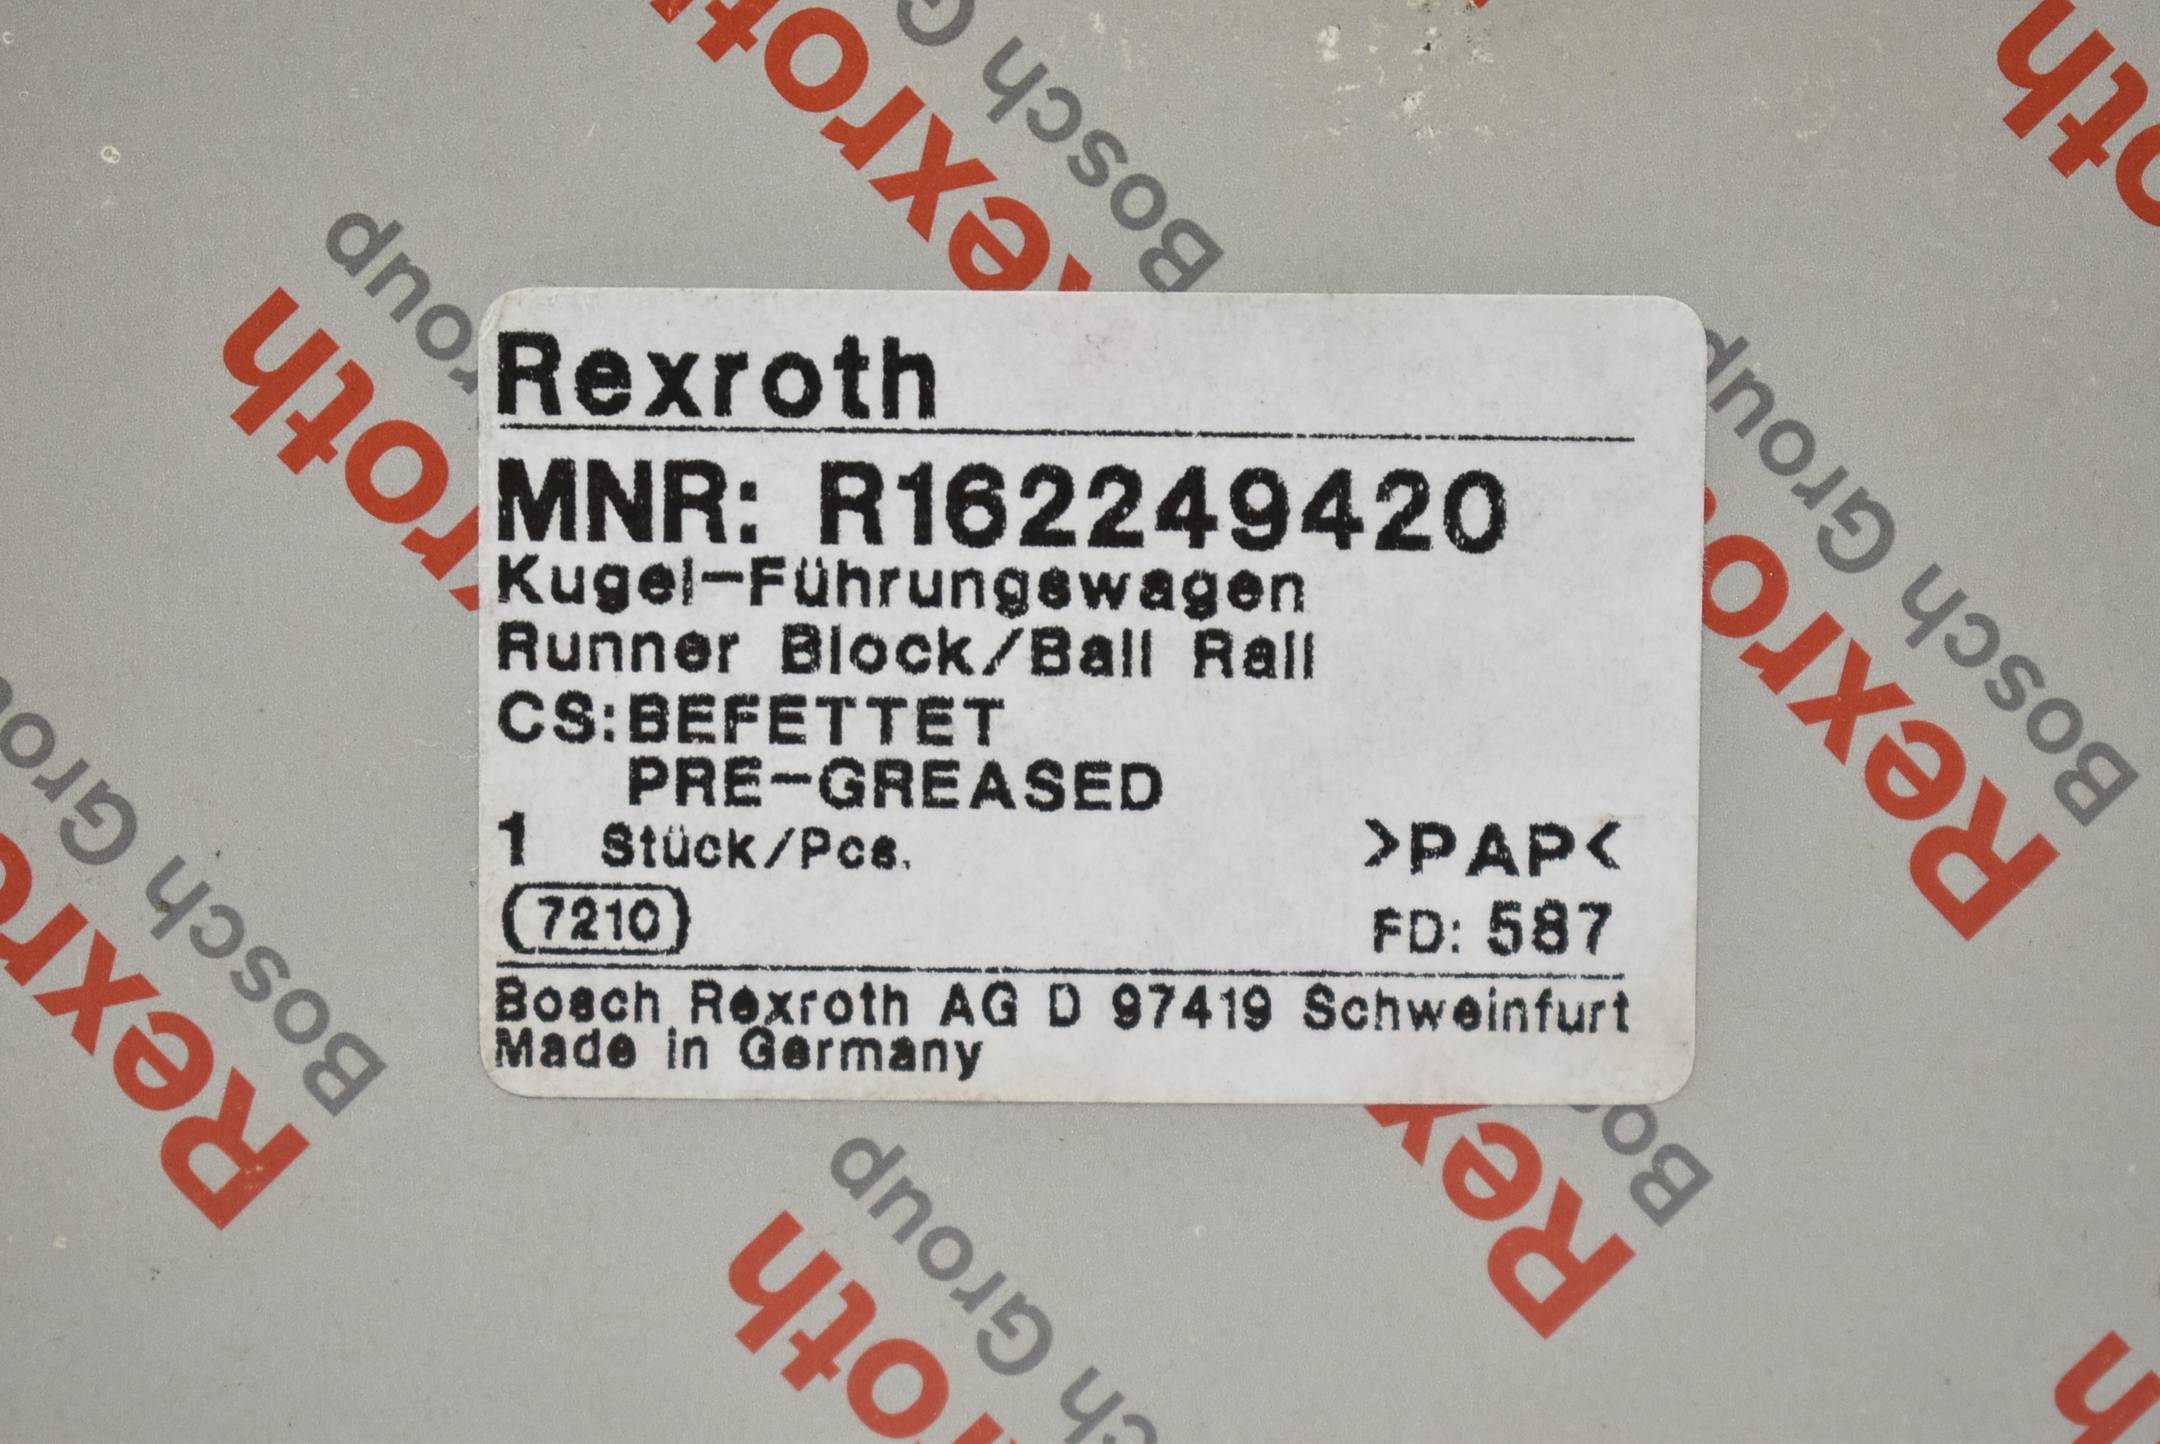 Rexroth Kugel-Führungswagen Runner Block R162249420